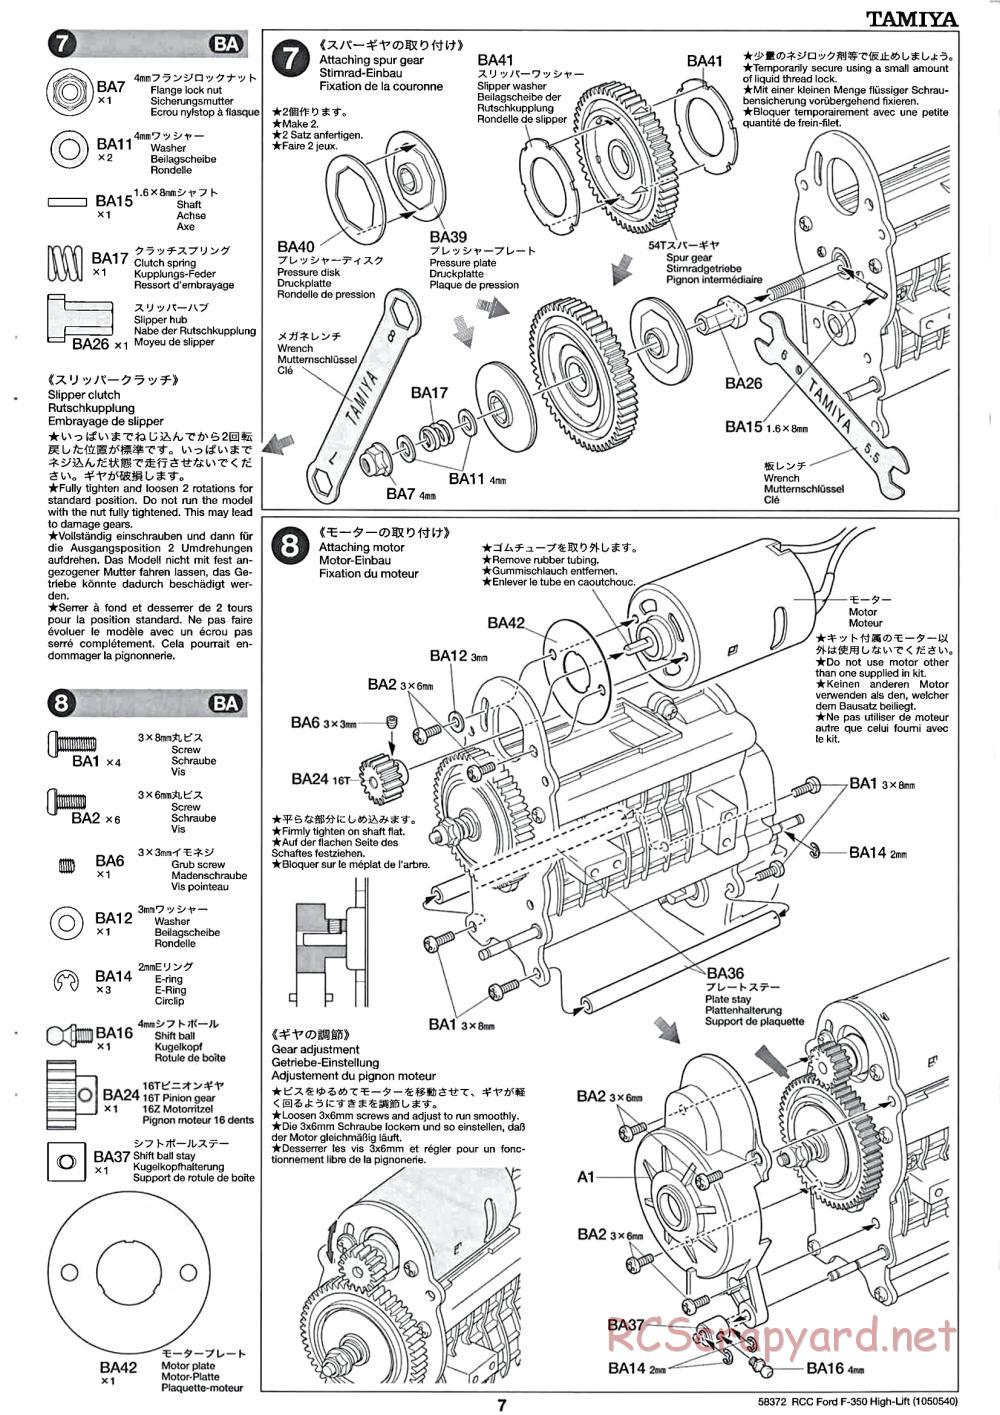 Tamiya - Ford F350 High-Lift Chassis - Manual - Page 7